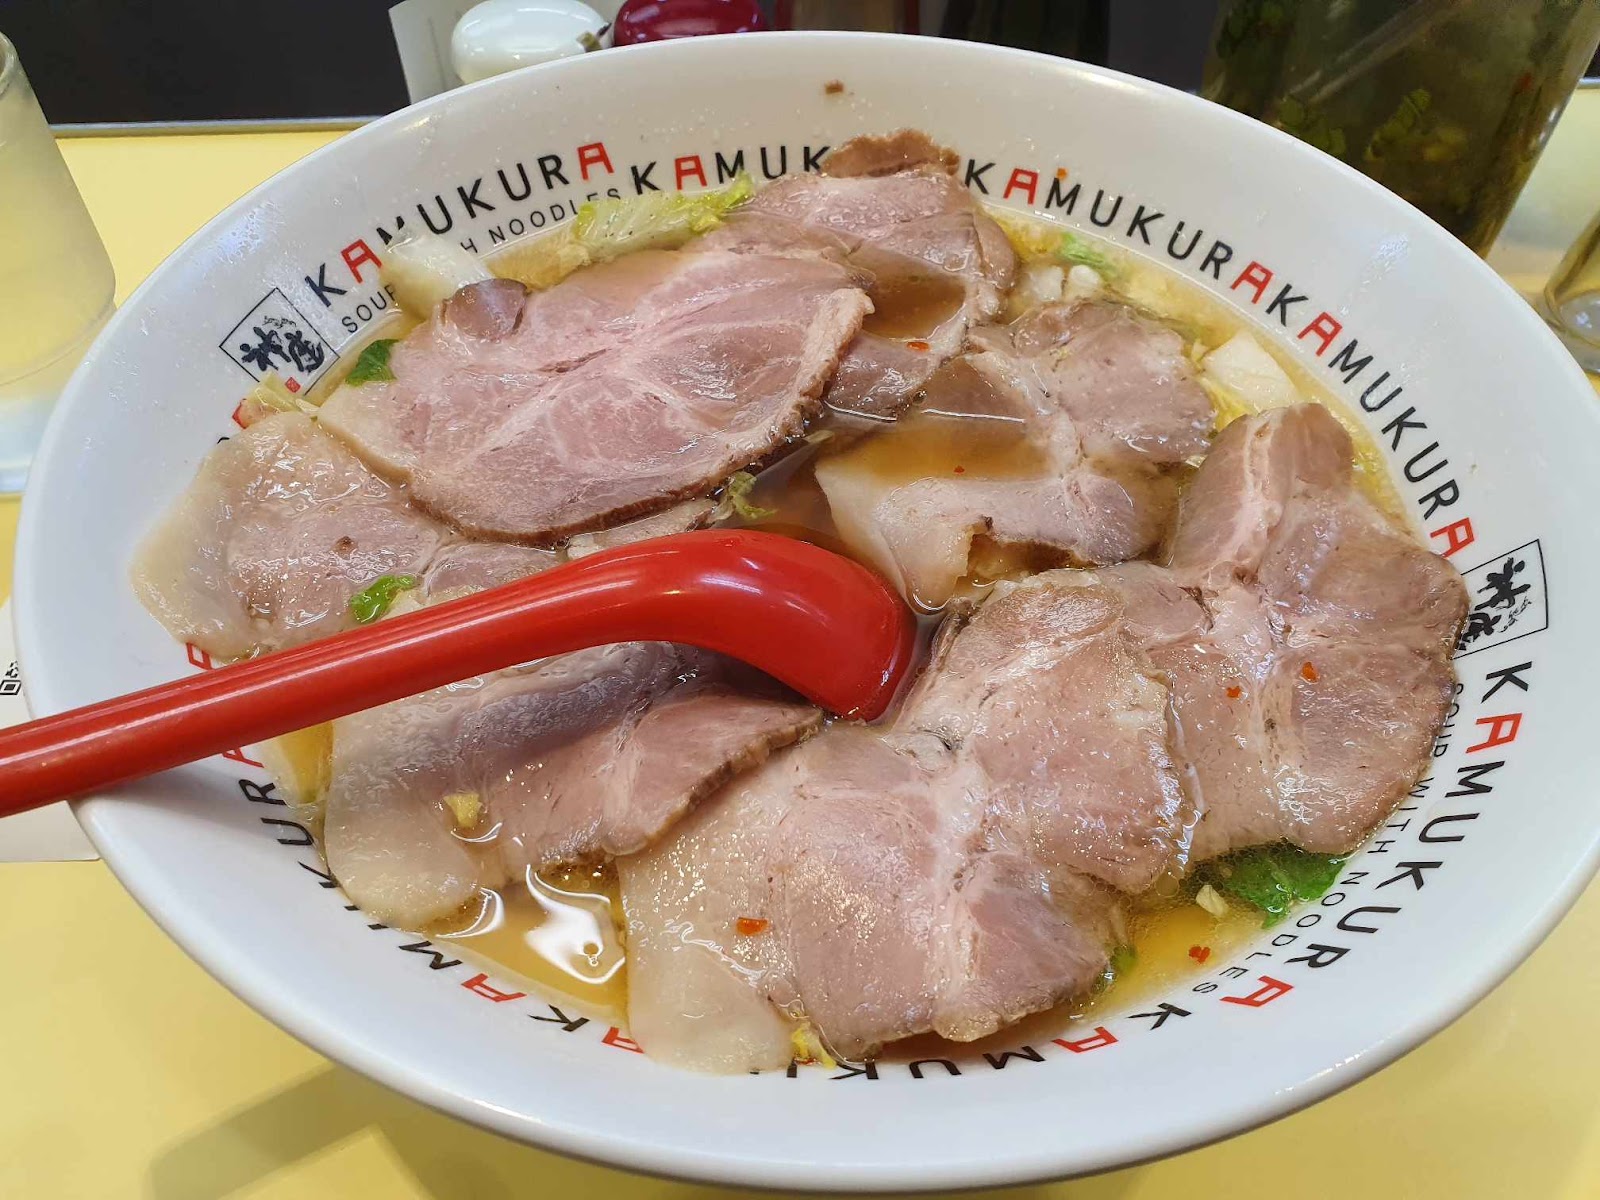 Dotombori Kamukura Lucua Osaka's cabbage ramen with char siu slices